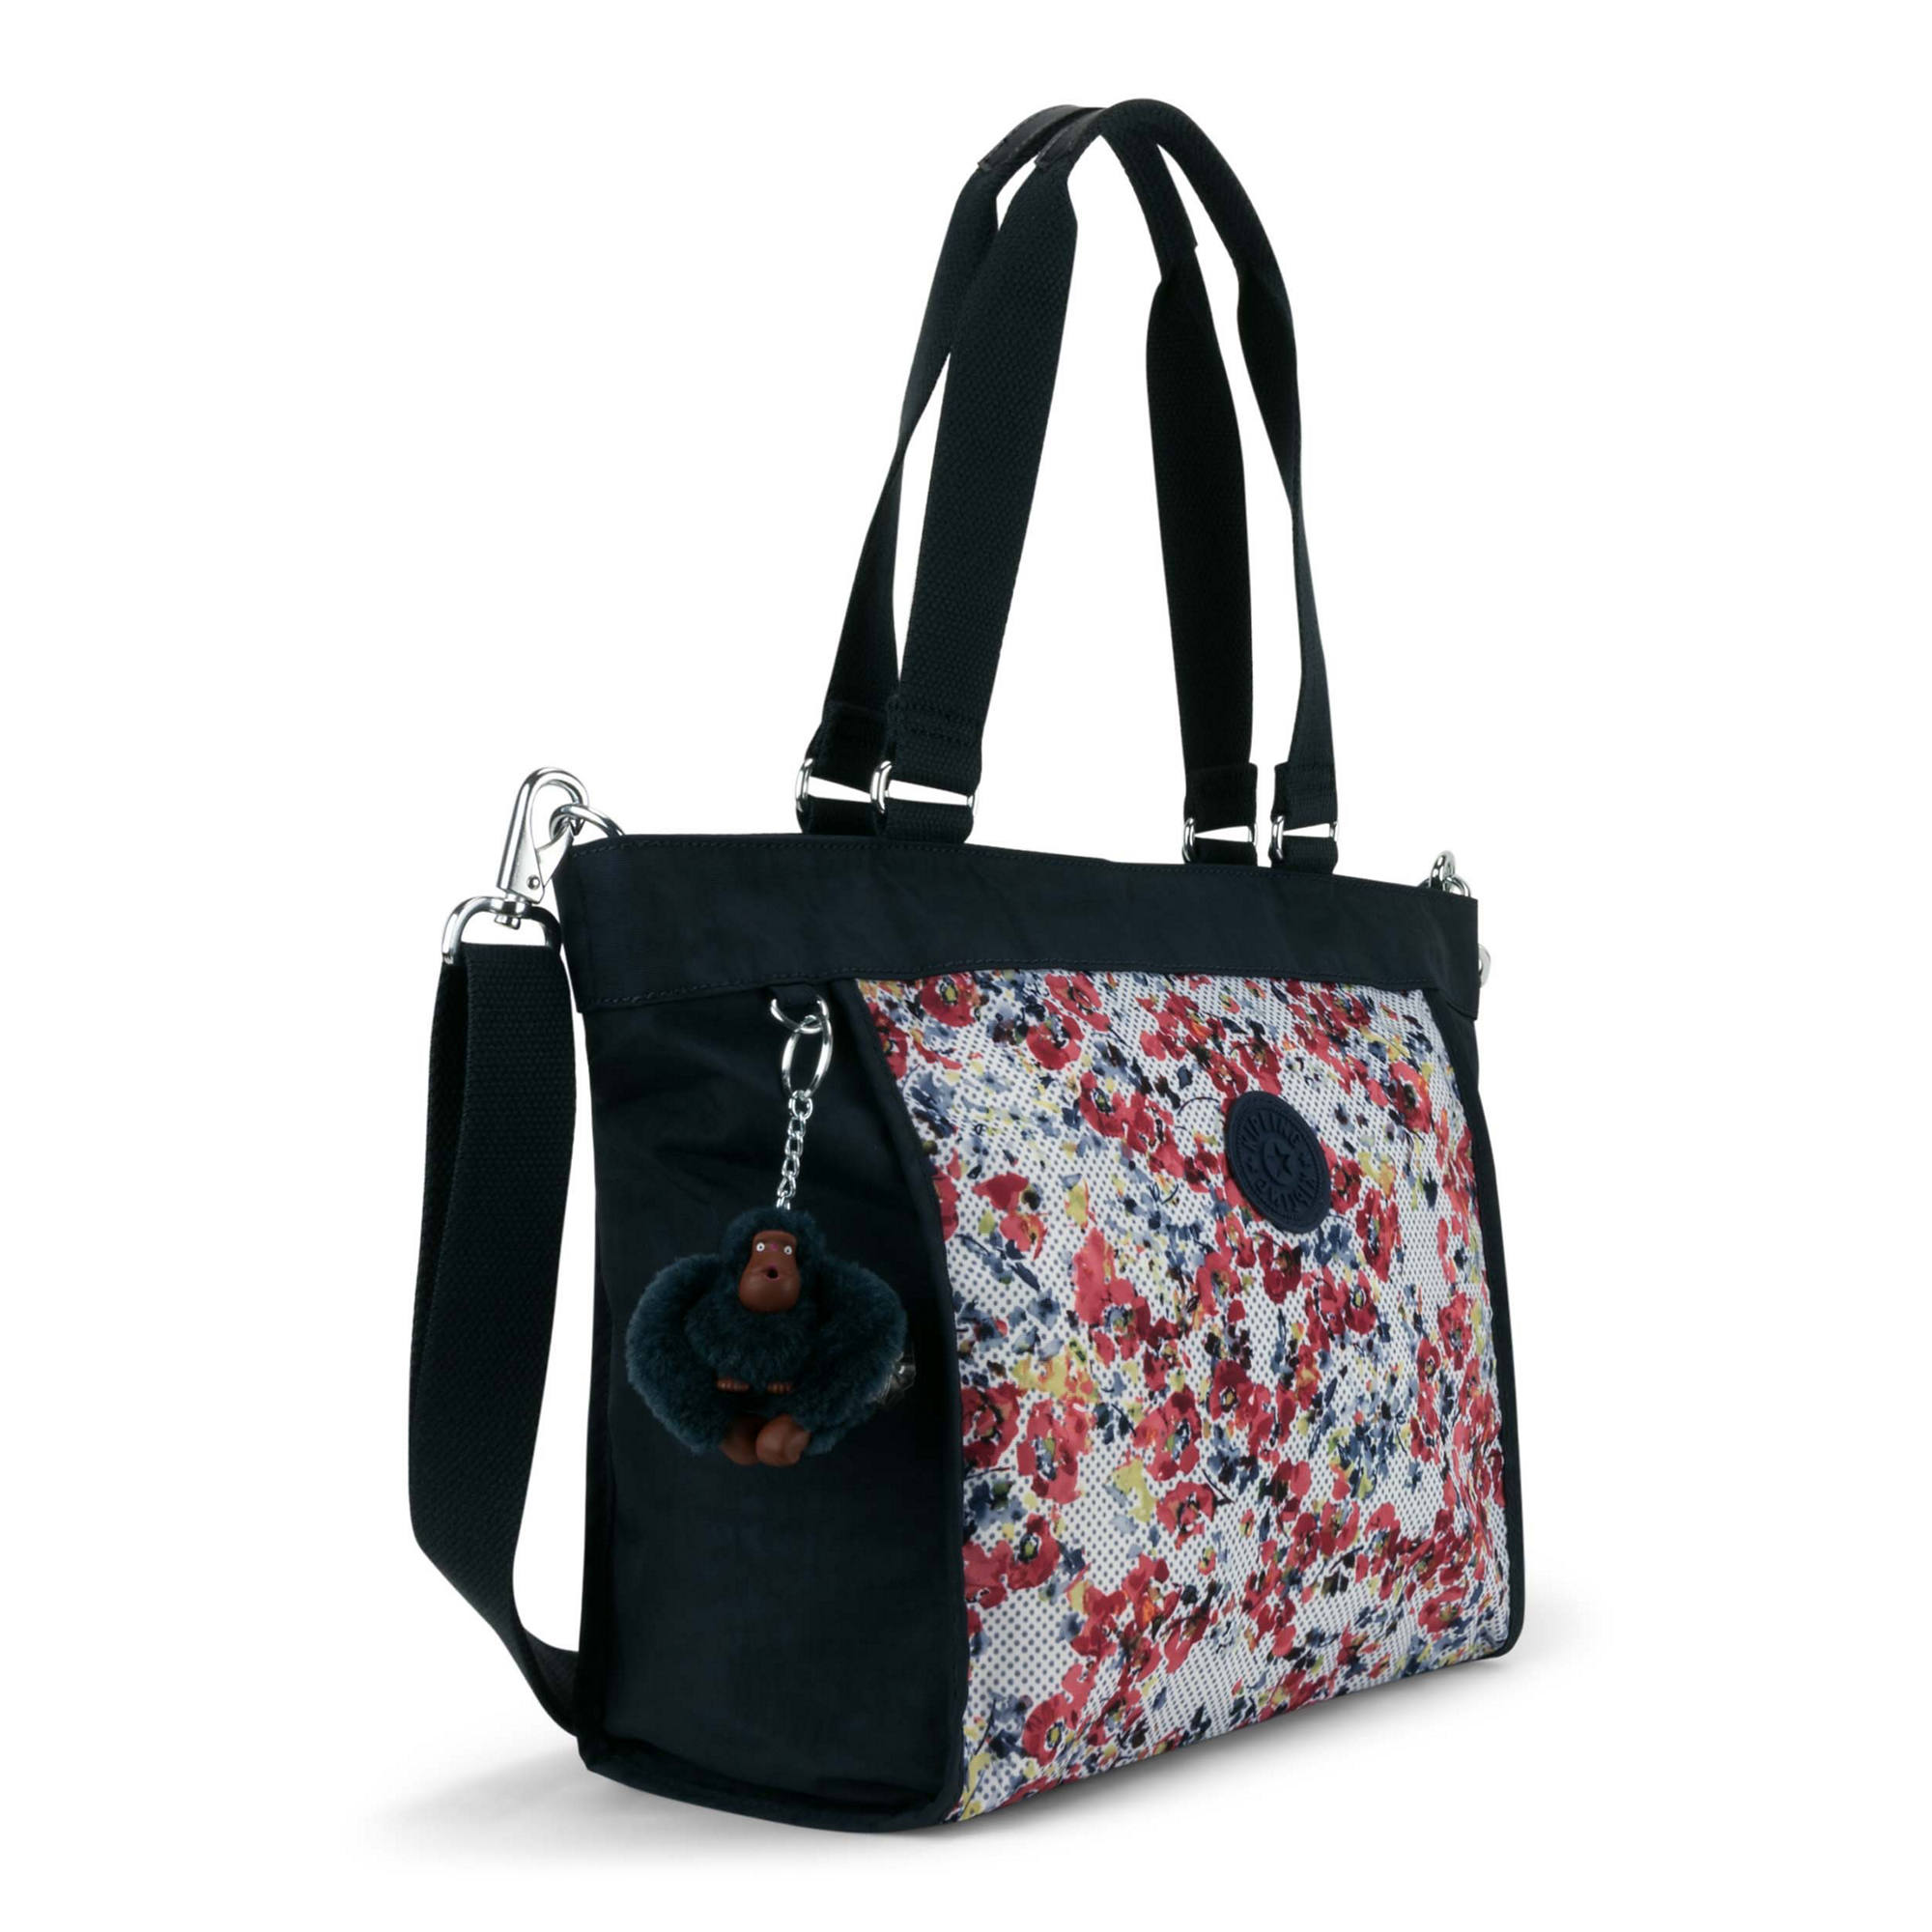 Kipling New Shopper Small Tote Bag | eBay